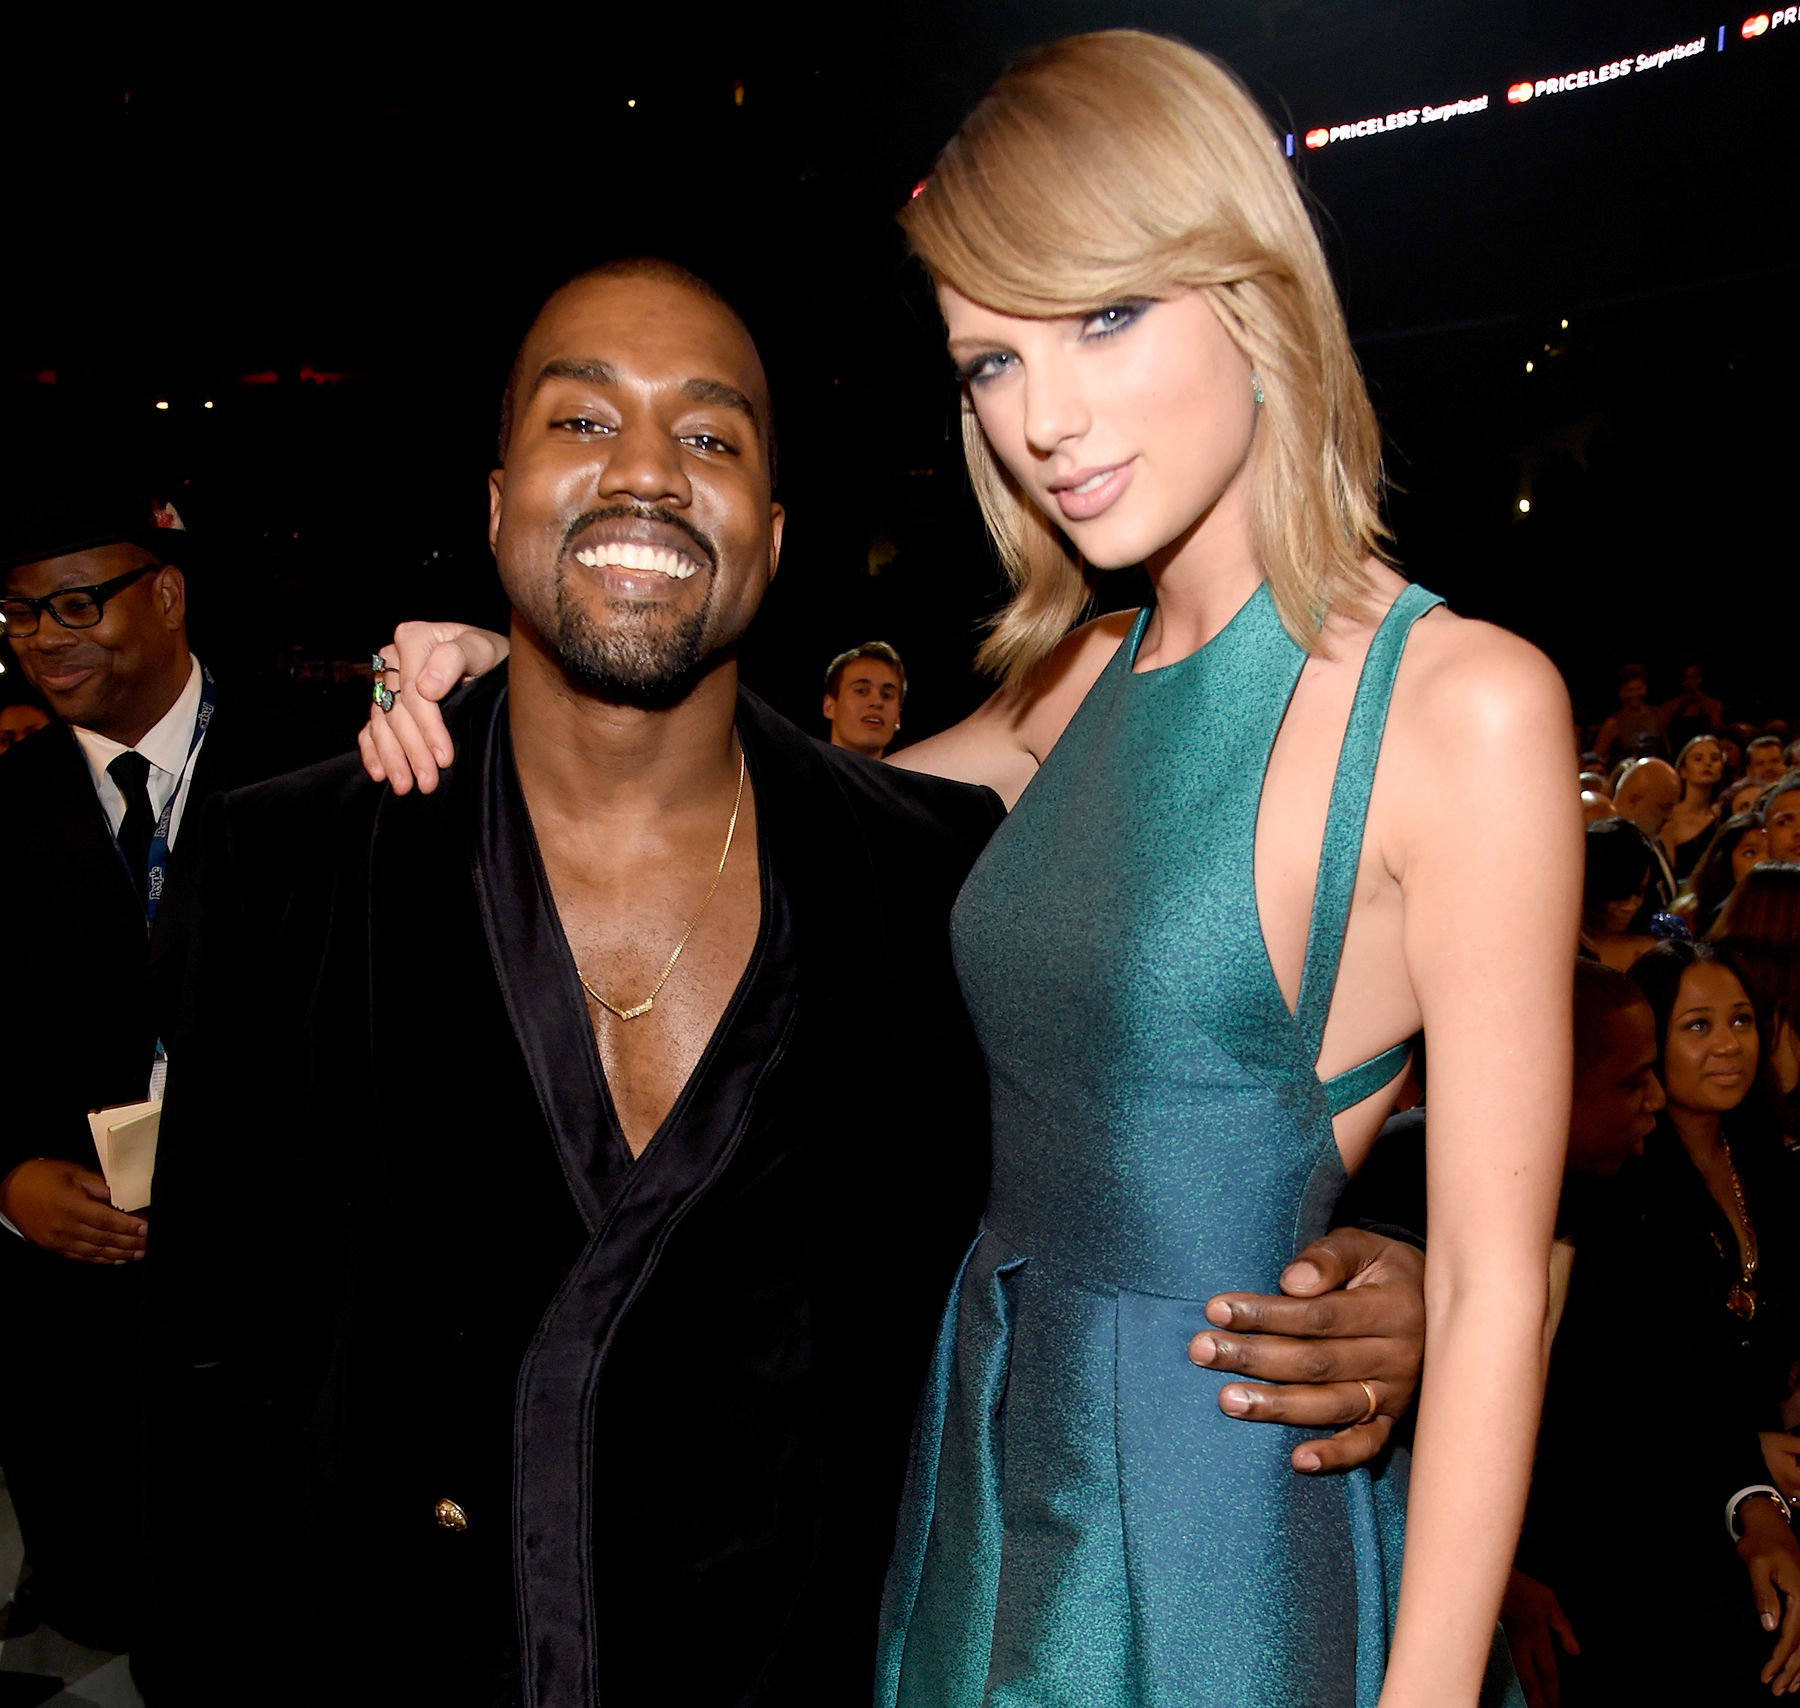 Război între Kanye West și Taylor Swift: ”I made that b**ch famous!”